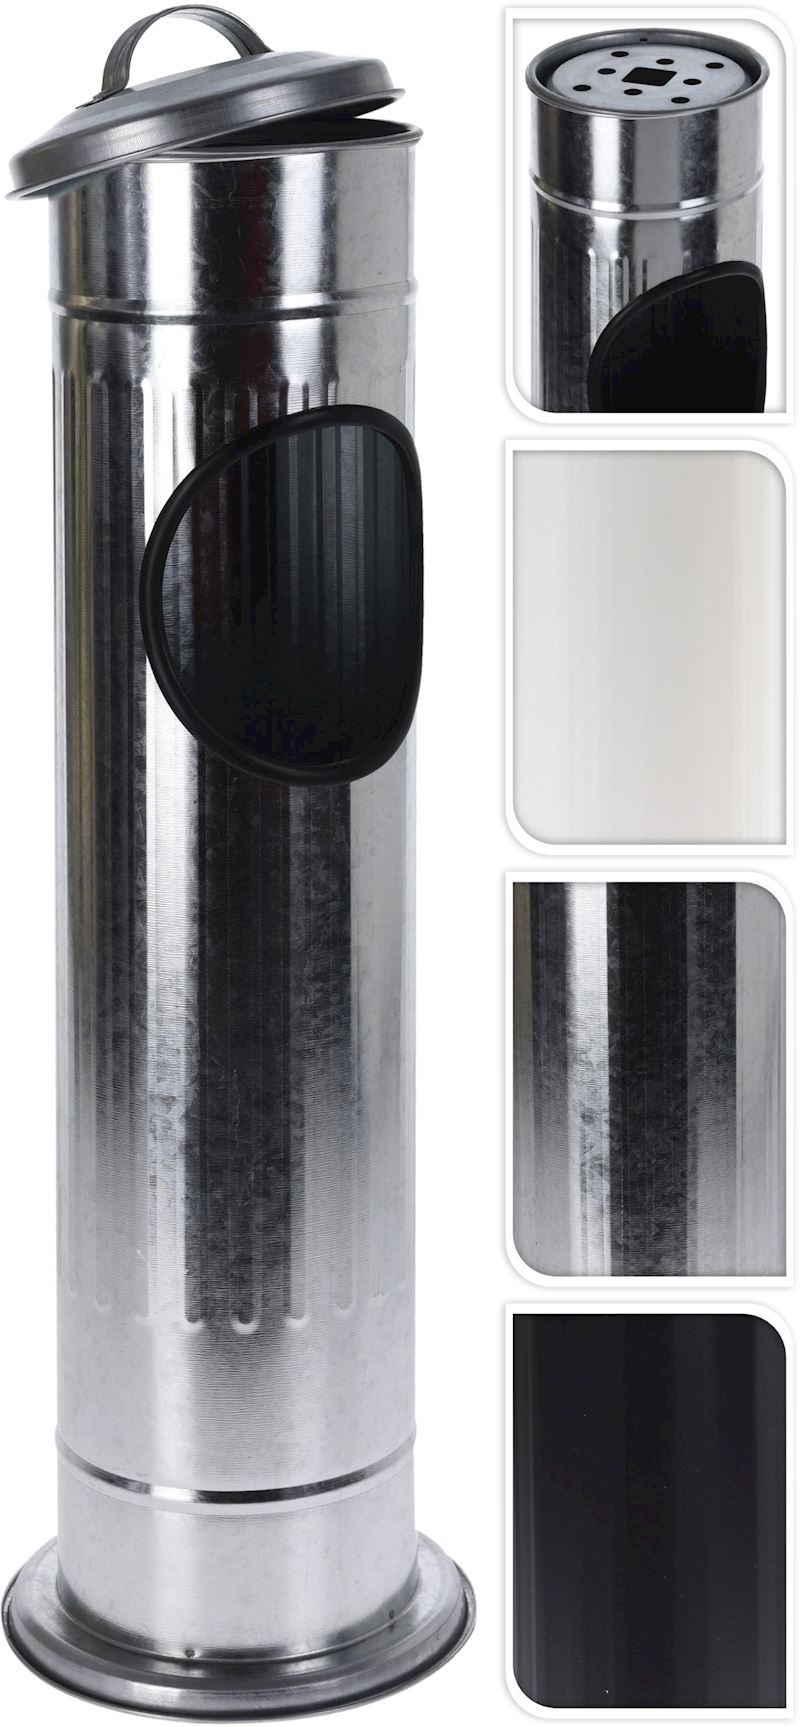 Aschenbecher 56.5x14.7cm 3 Farben schwarz,silber,weiss